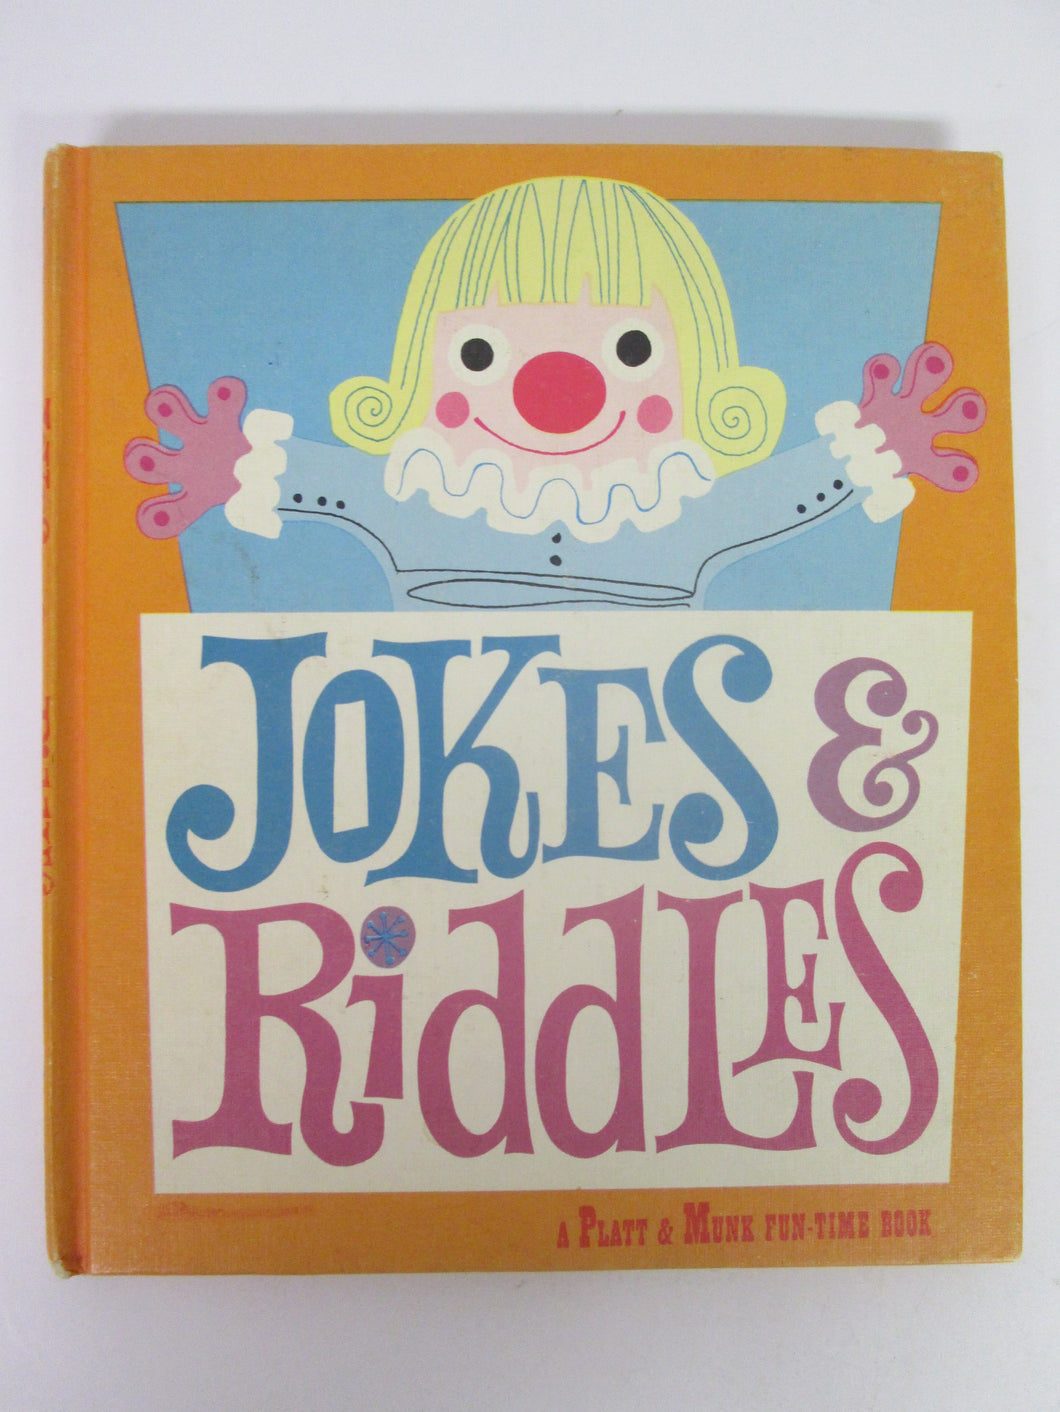 Jokes & Riddles by George Carlson HC 1959